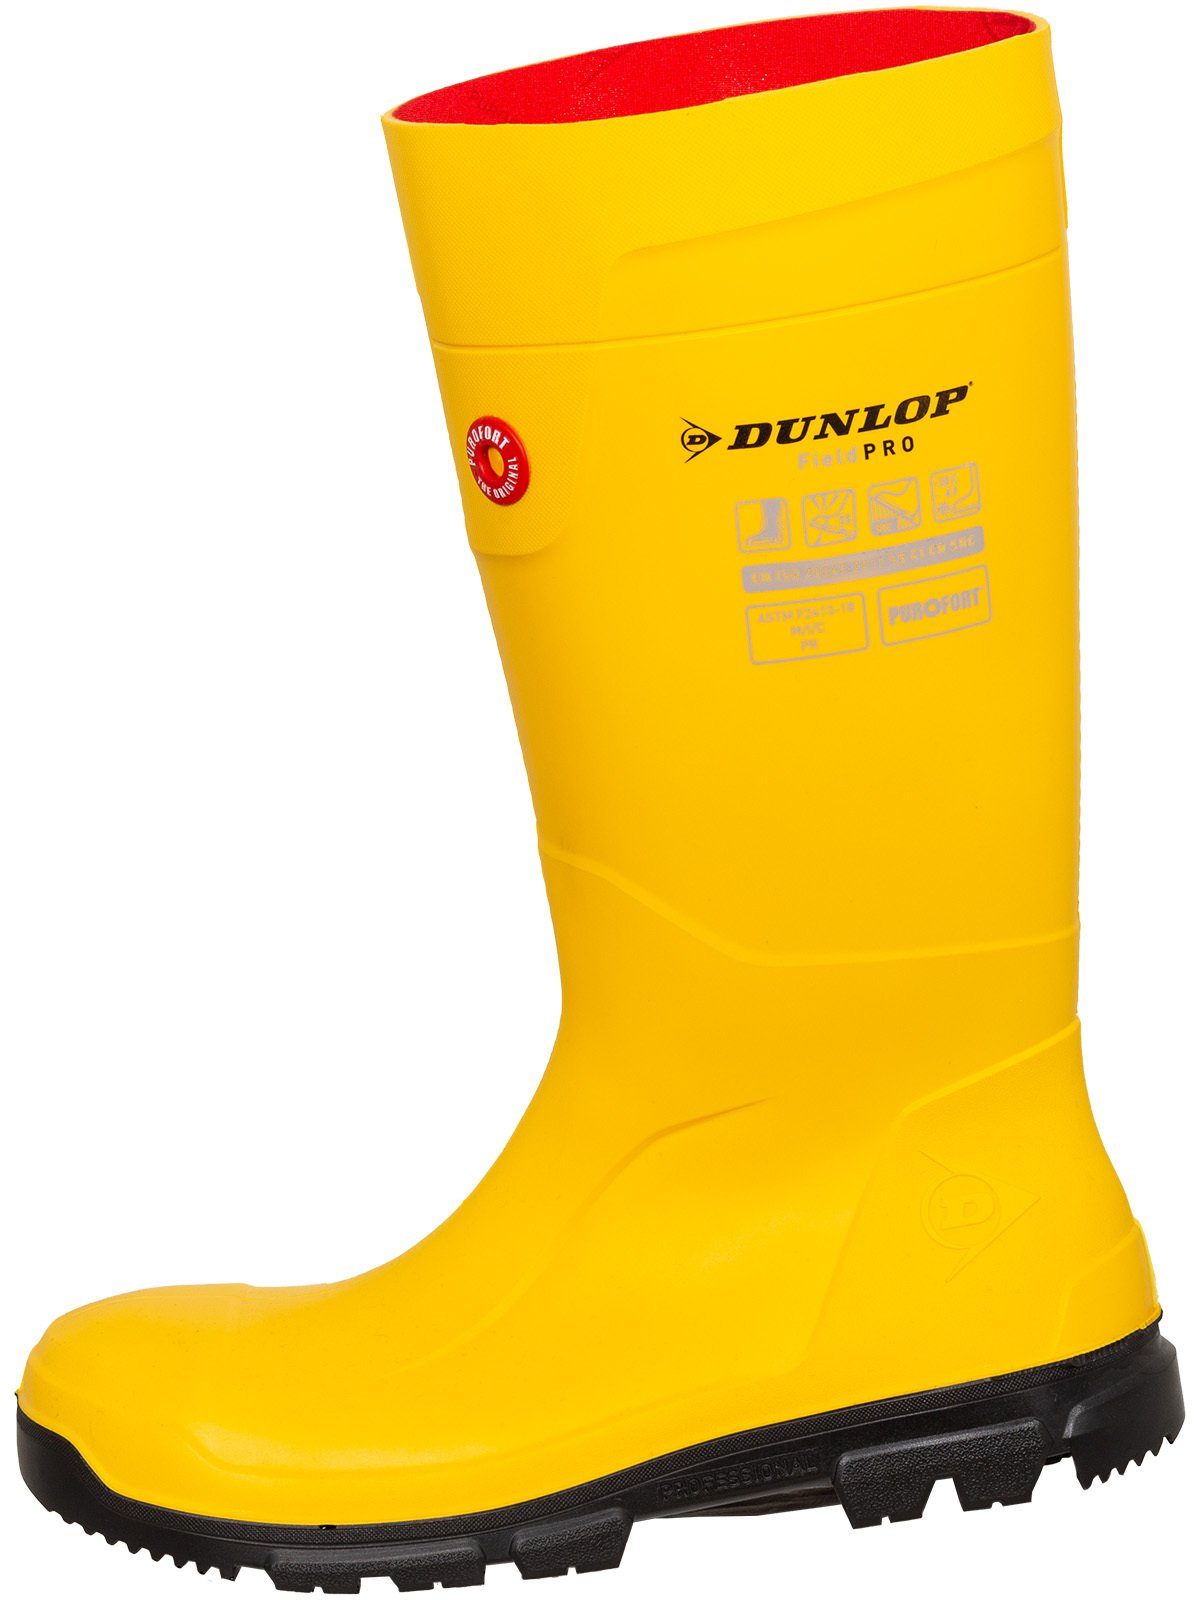 S5 Dunlop_Workwear Pro Field Gummistiefel Purofort Dunlop